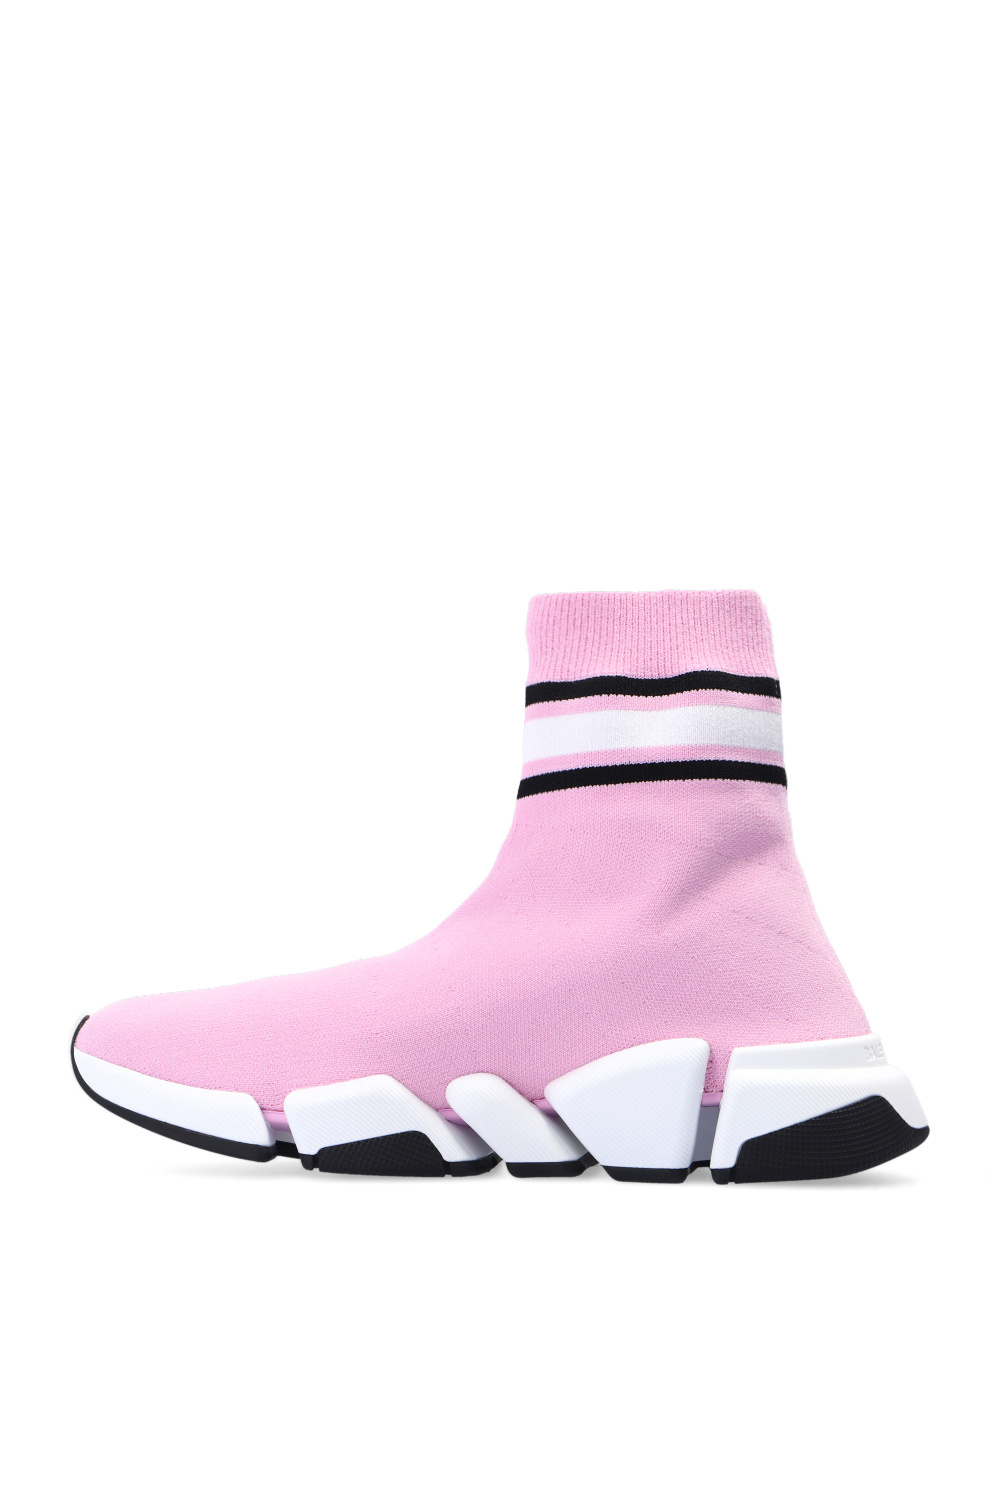 Balenciaga ‘Speed 2.0 Lt’ sock sneakers